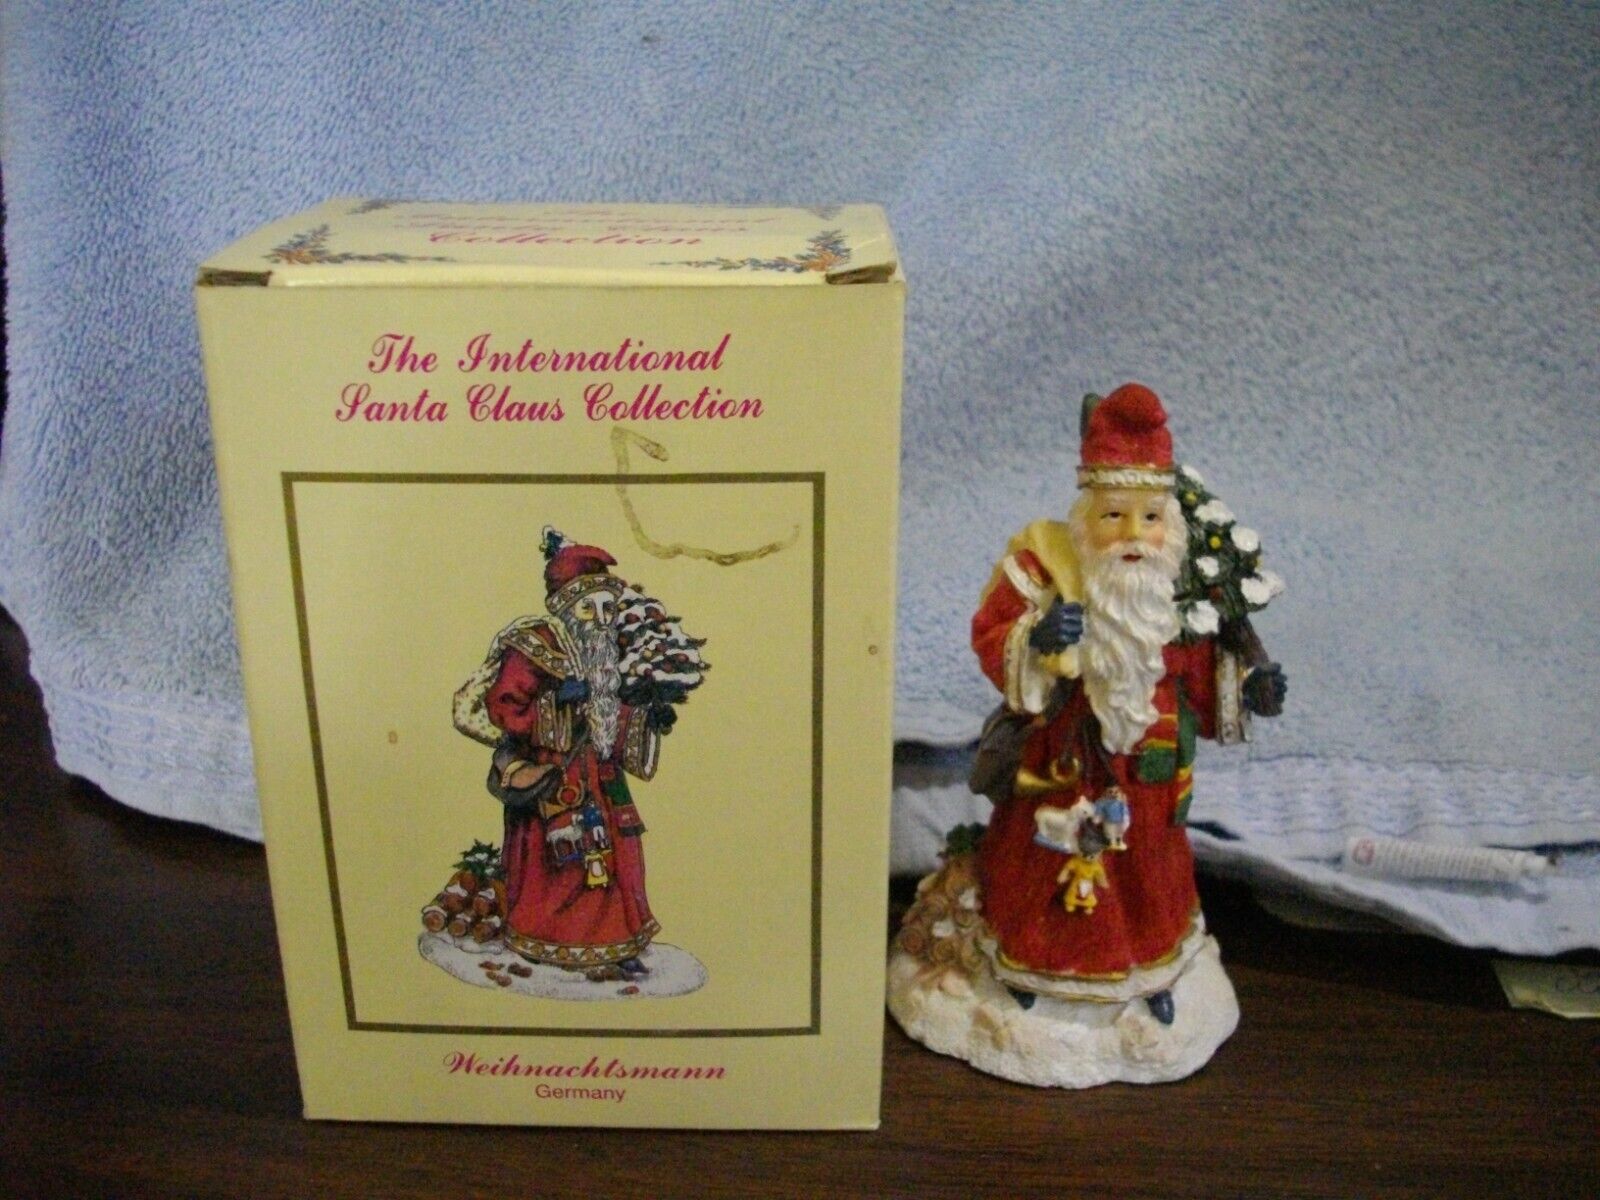 The International Santa Claus Collection Weihanachtsmann Germany Figurine CS18 